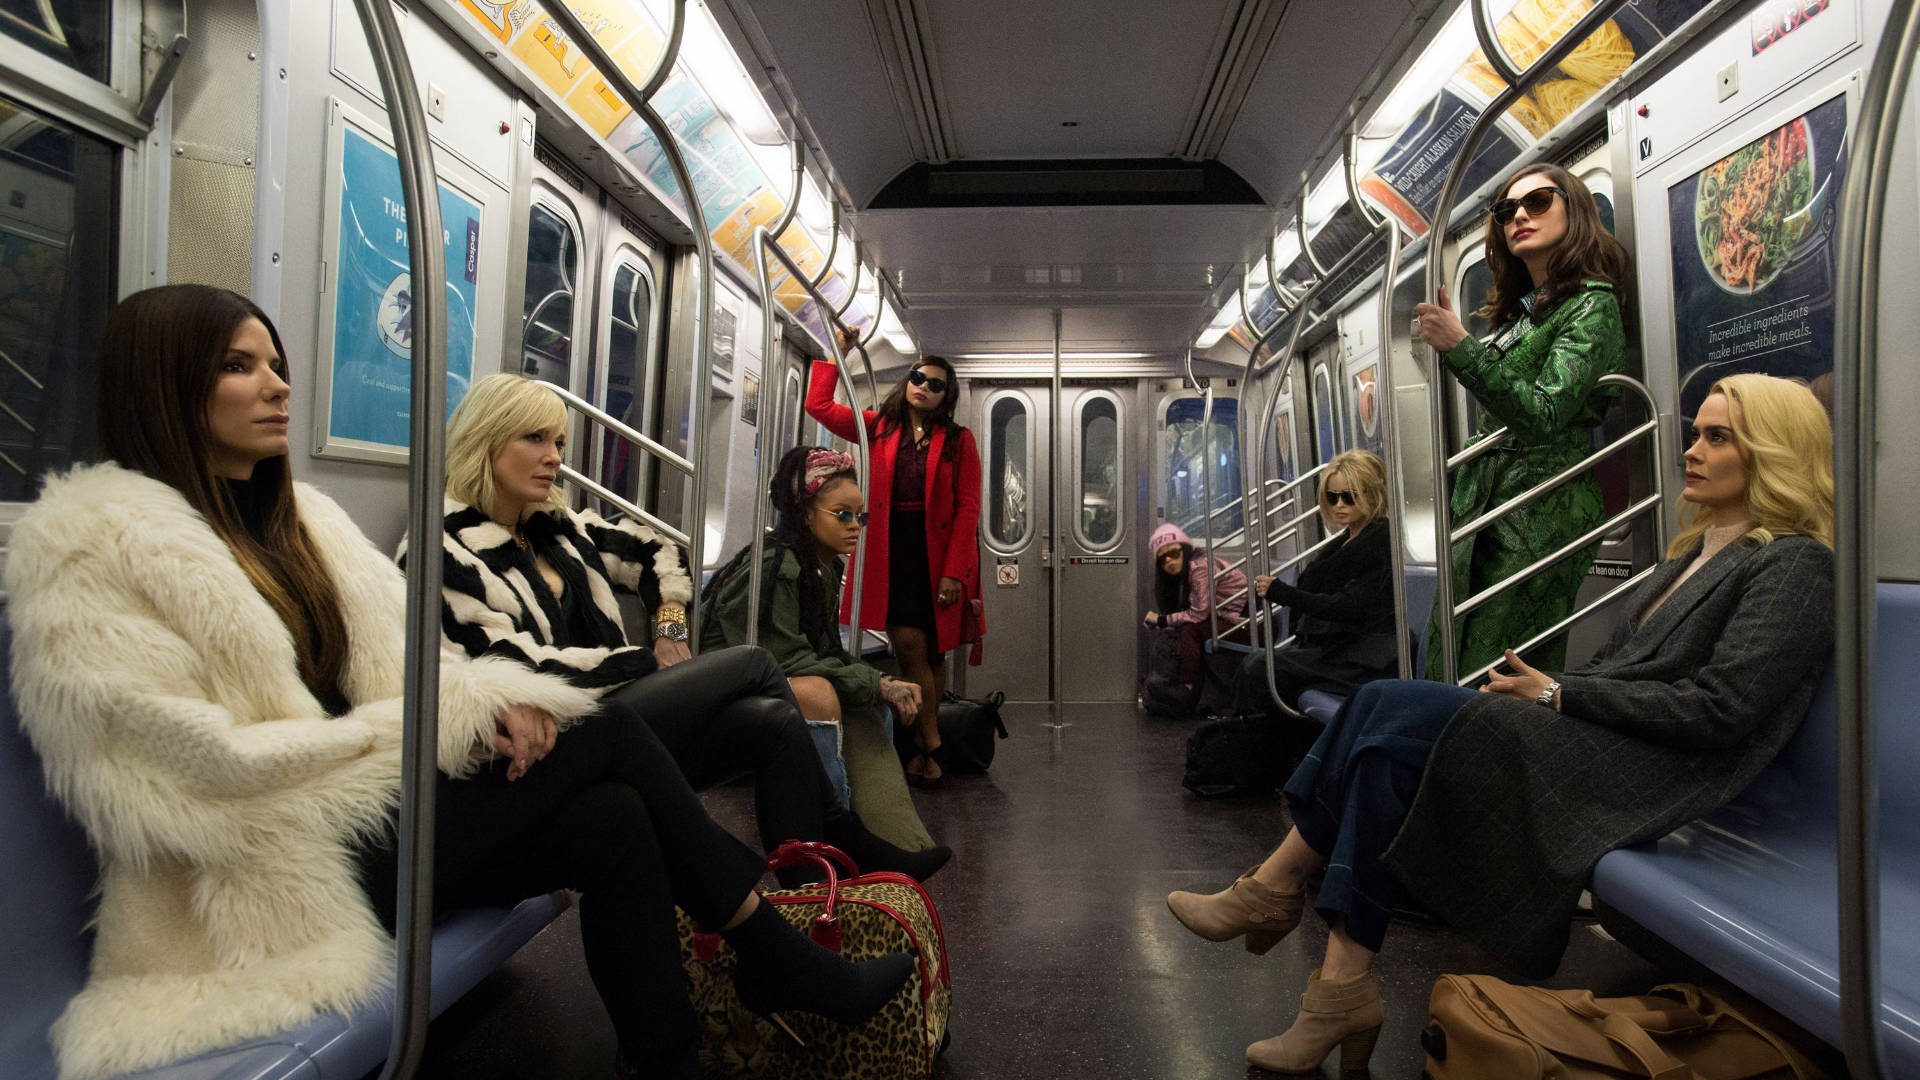 Cate Blanchett Ocean's 8 Subway Scene